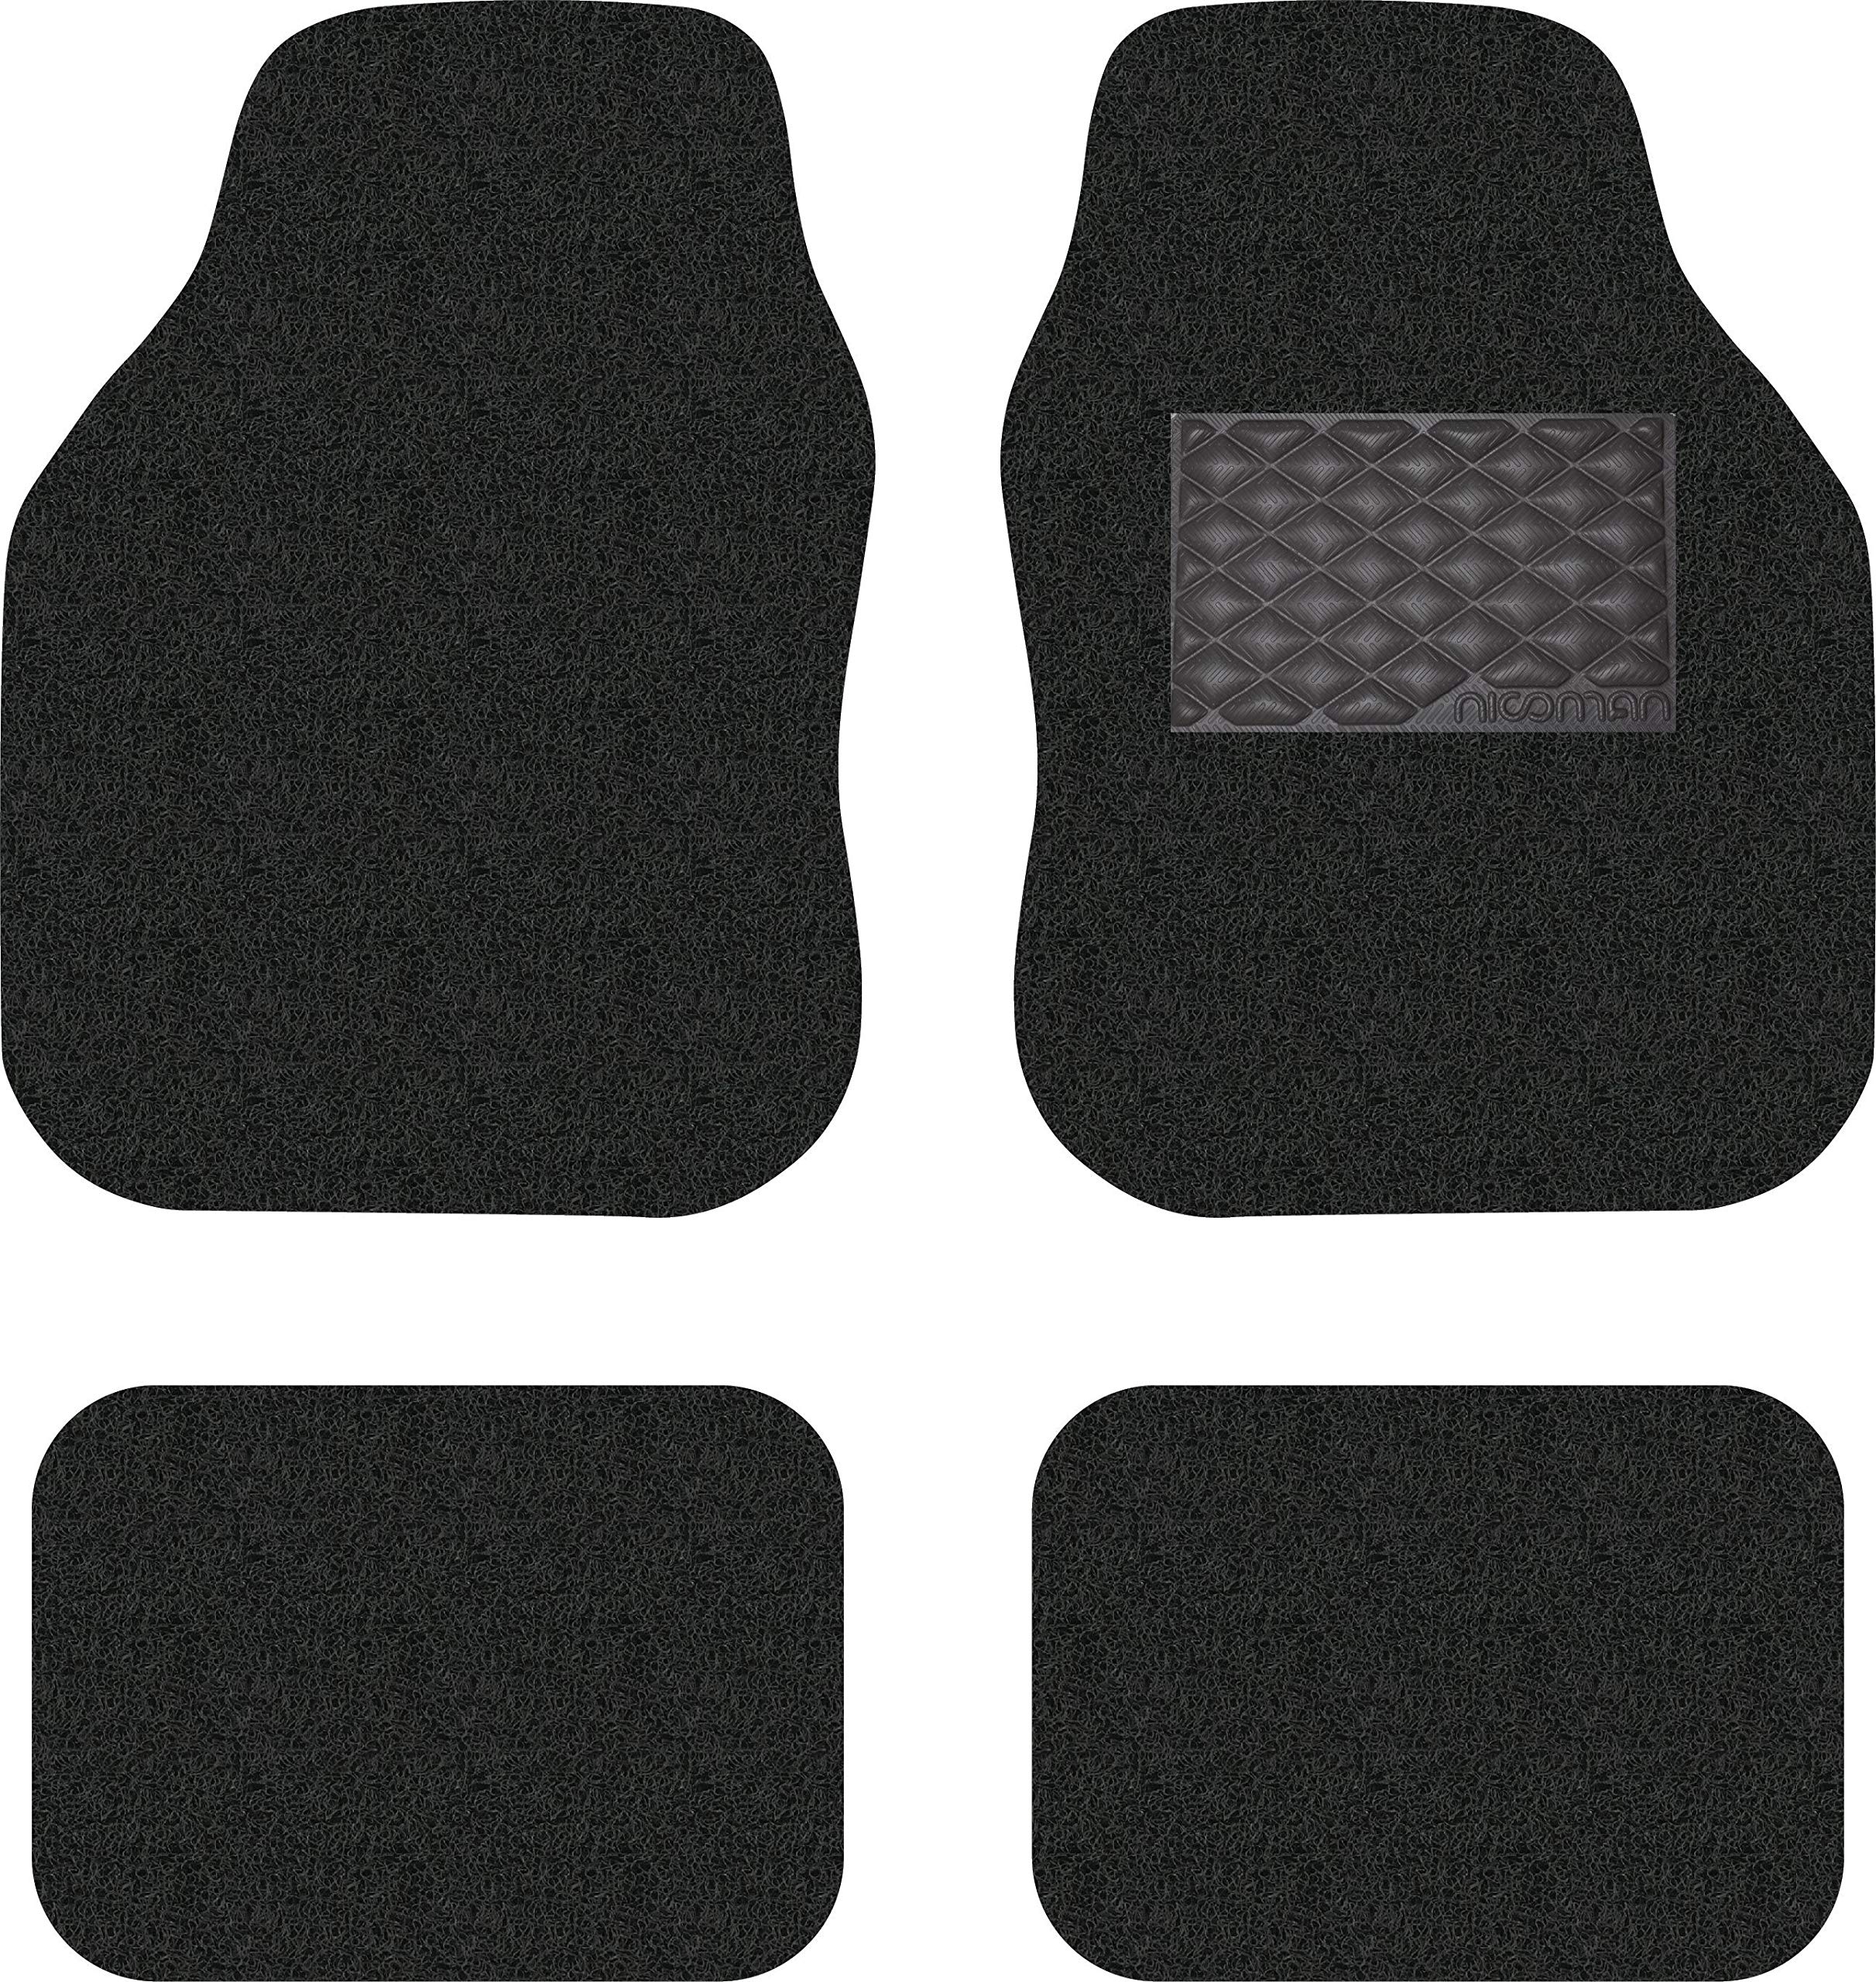 Nicoman Universal Non-Slip Dirt-Traper Jet-Washable Car Mat(Black, Full Set 4-Piece)